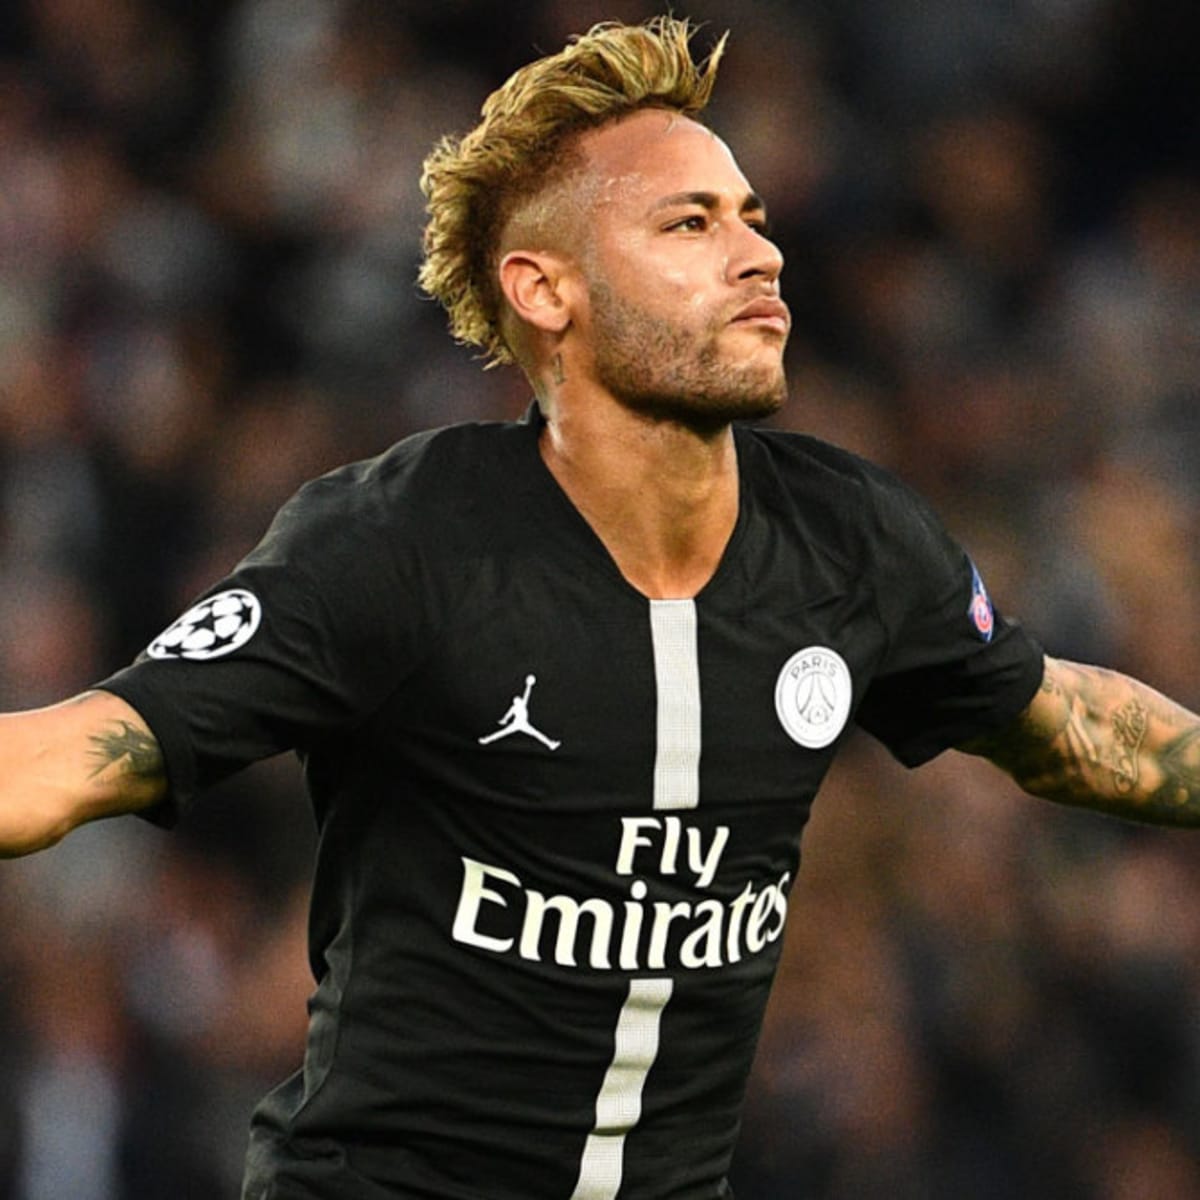 Neymar video: star scores hat trick vs. Red Star Belgrade - Sports Illustrated